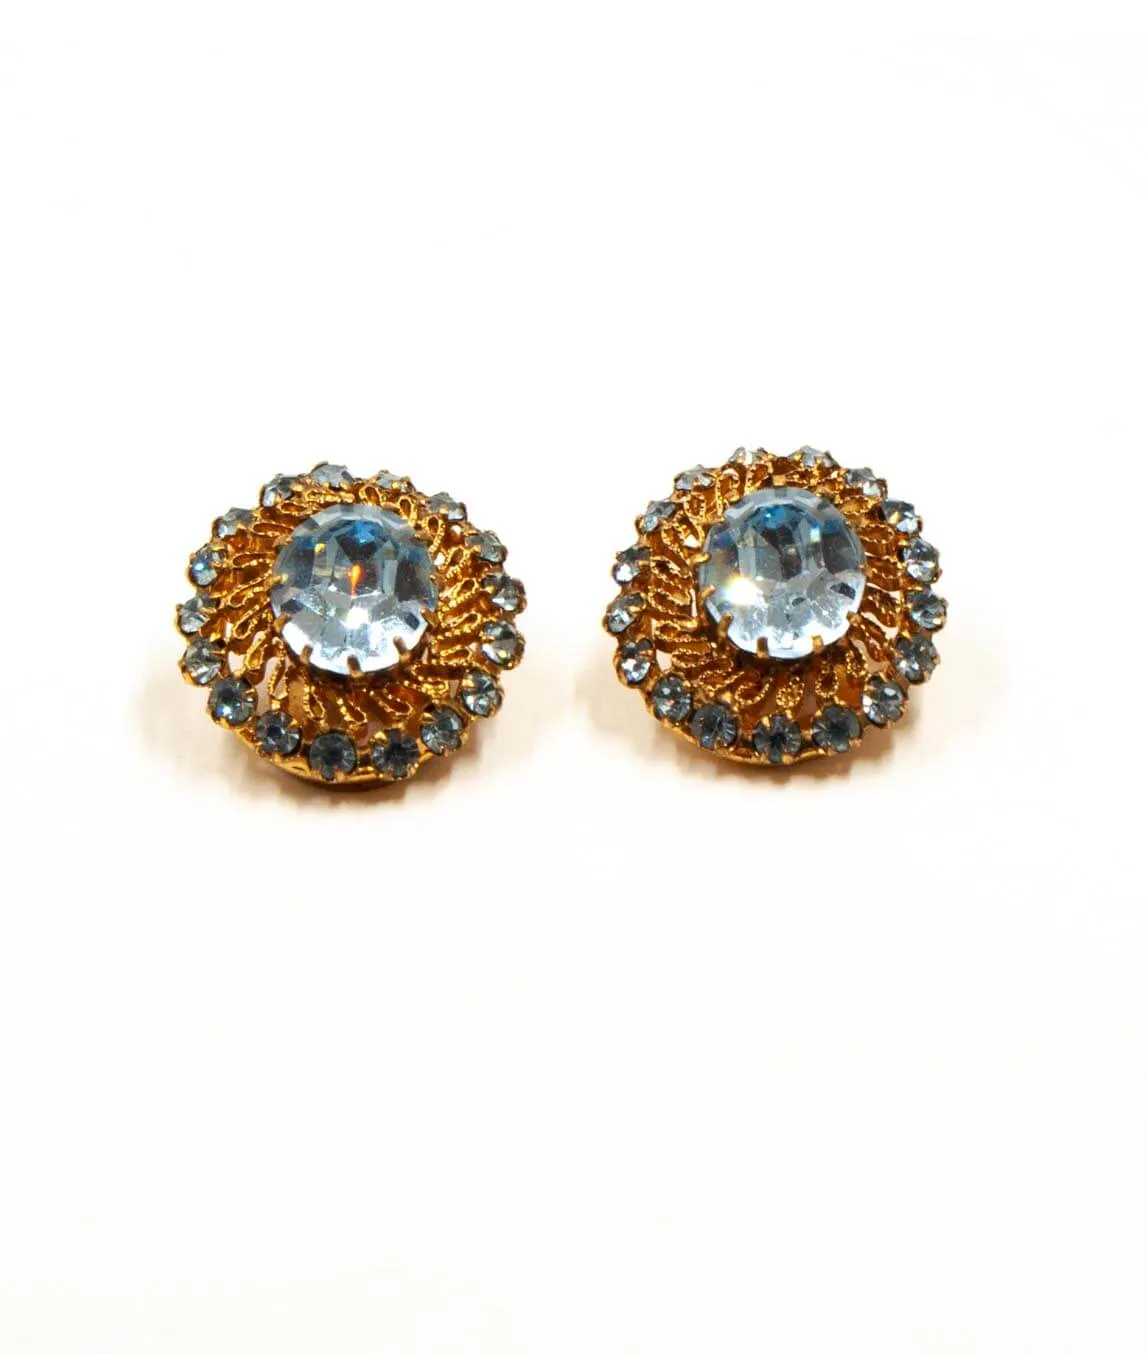 Vintage blue crystal and brass filigree earrings